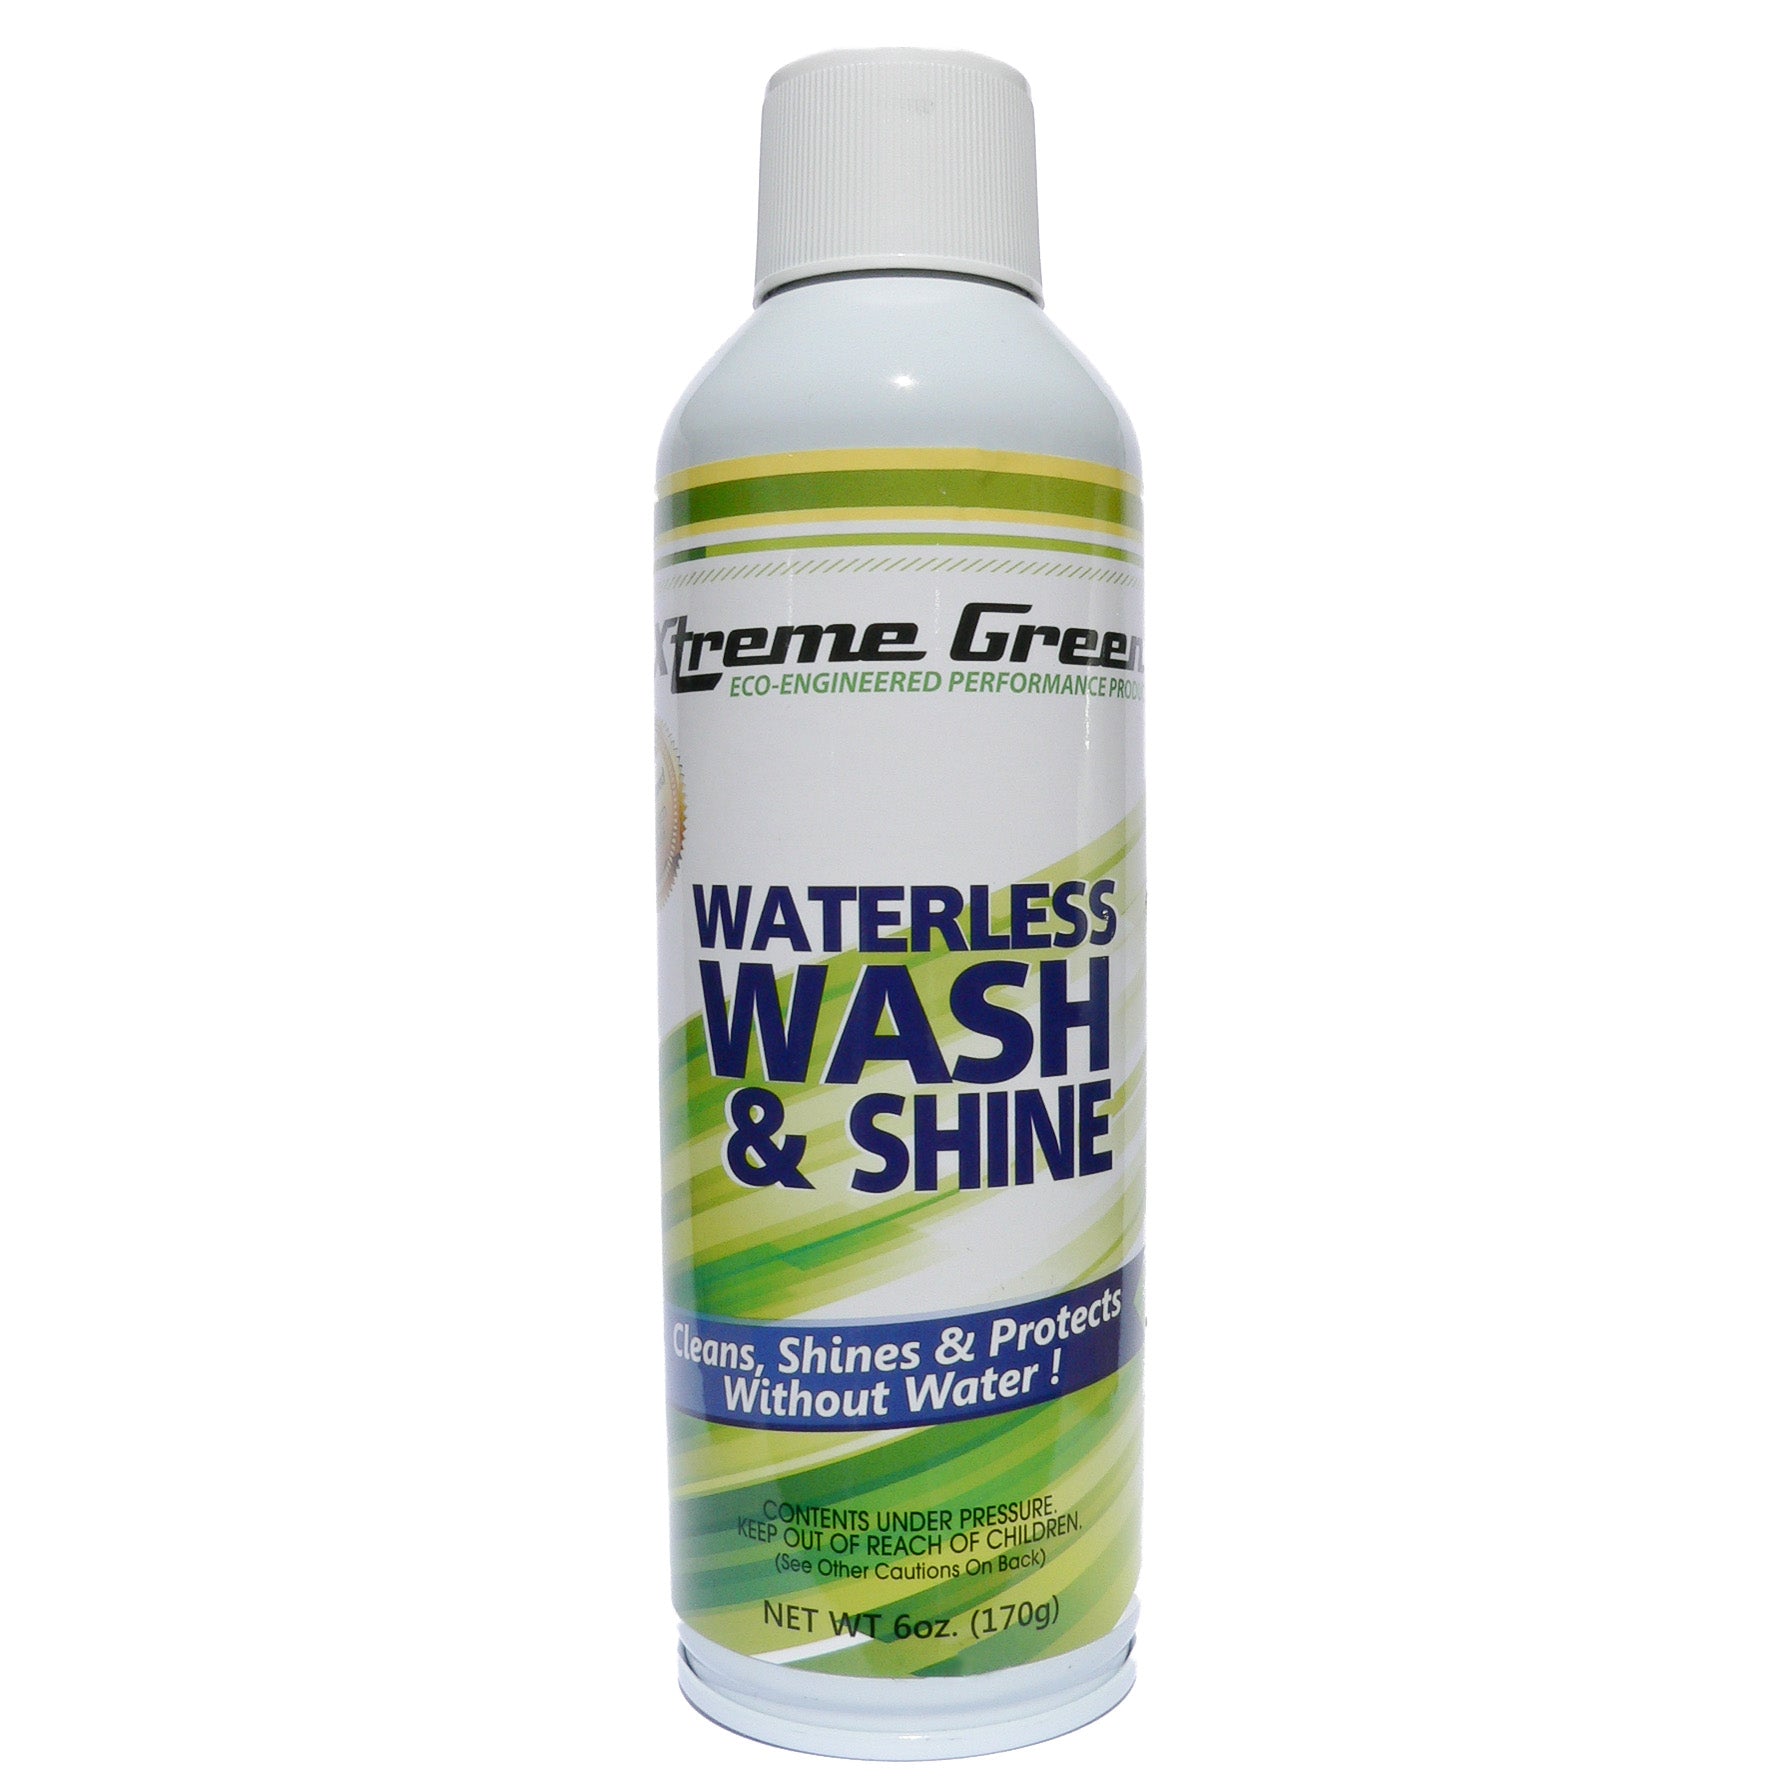 Xtreme Green Waterless Wash & Shine